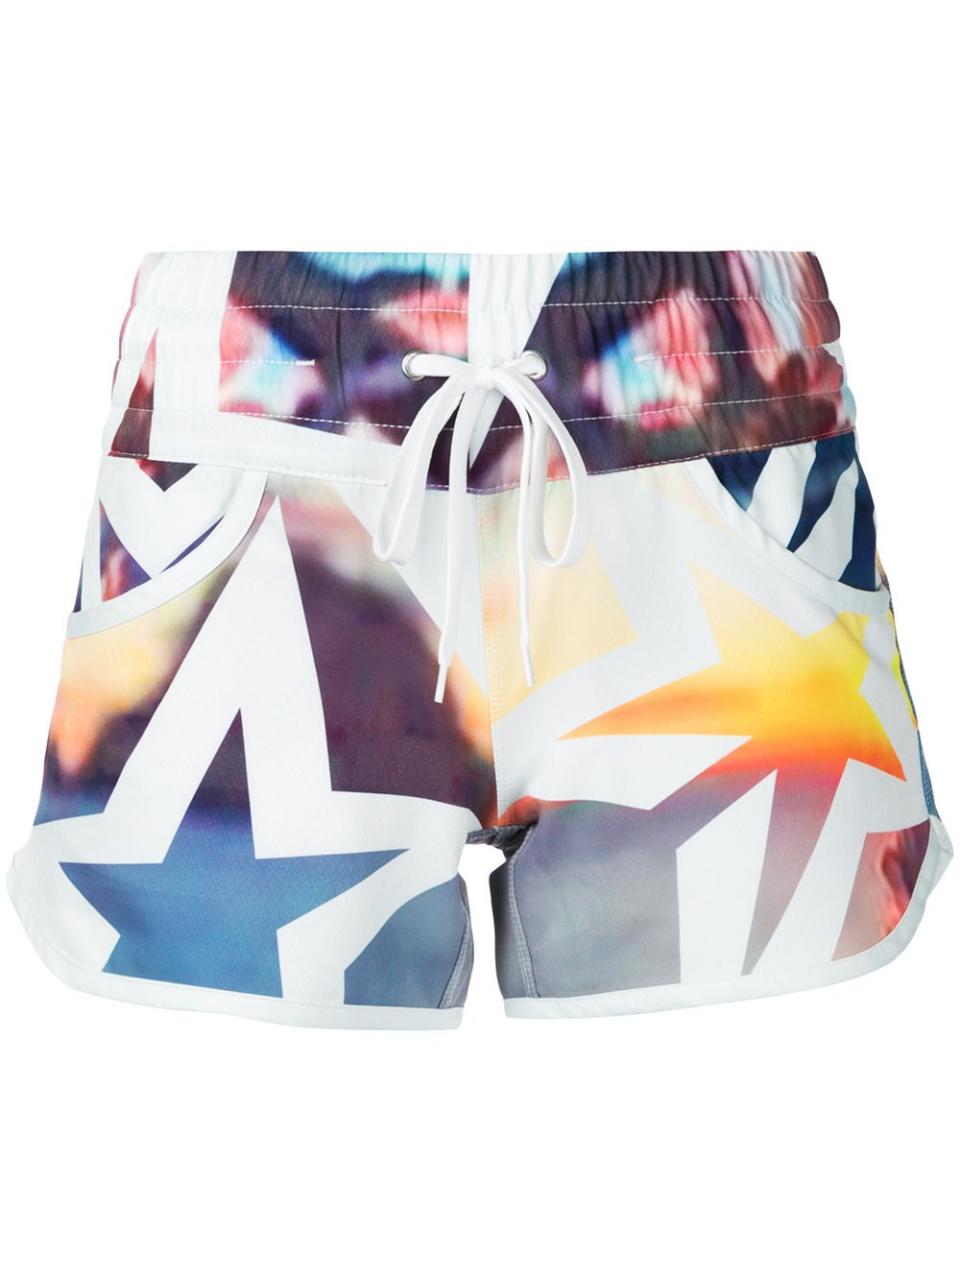 Perfect Moment AOP Resort Shorts Ibiza, $156